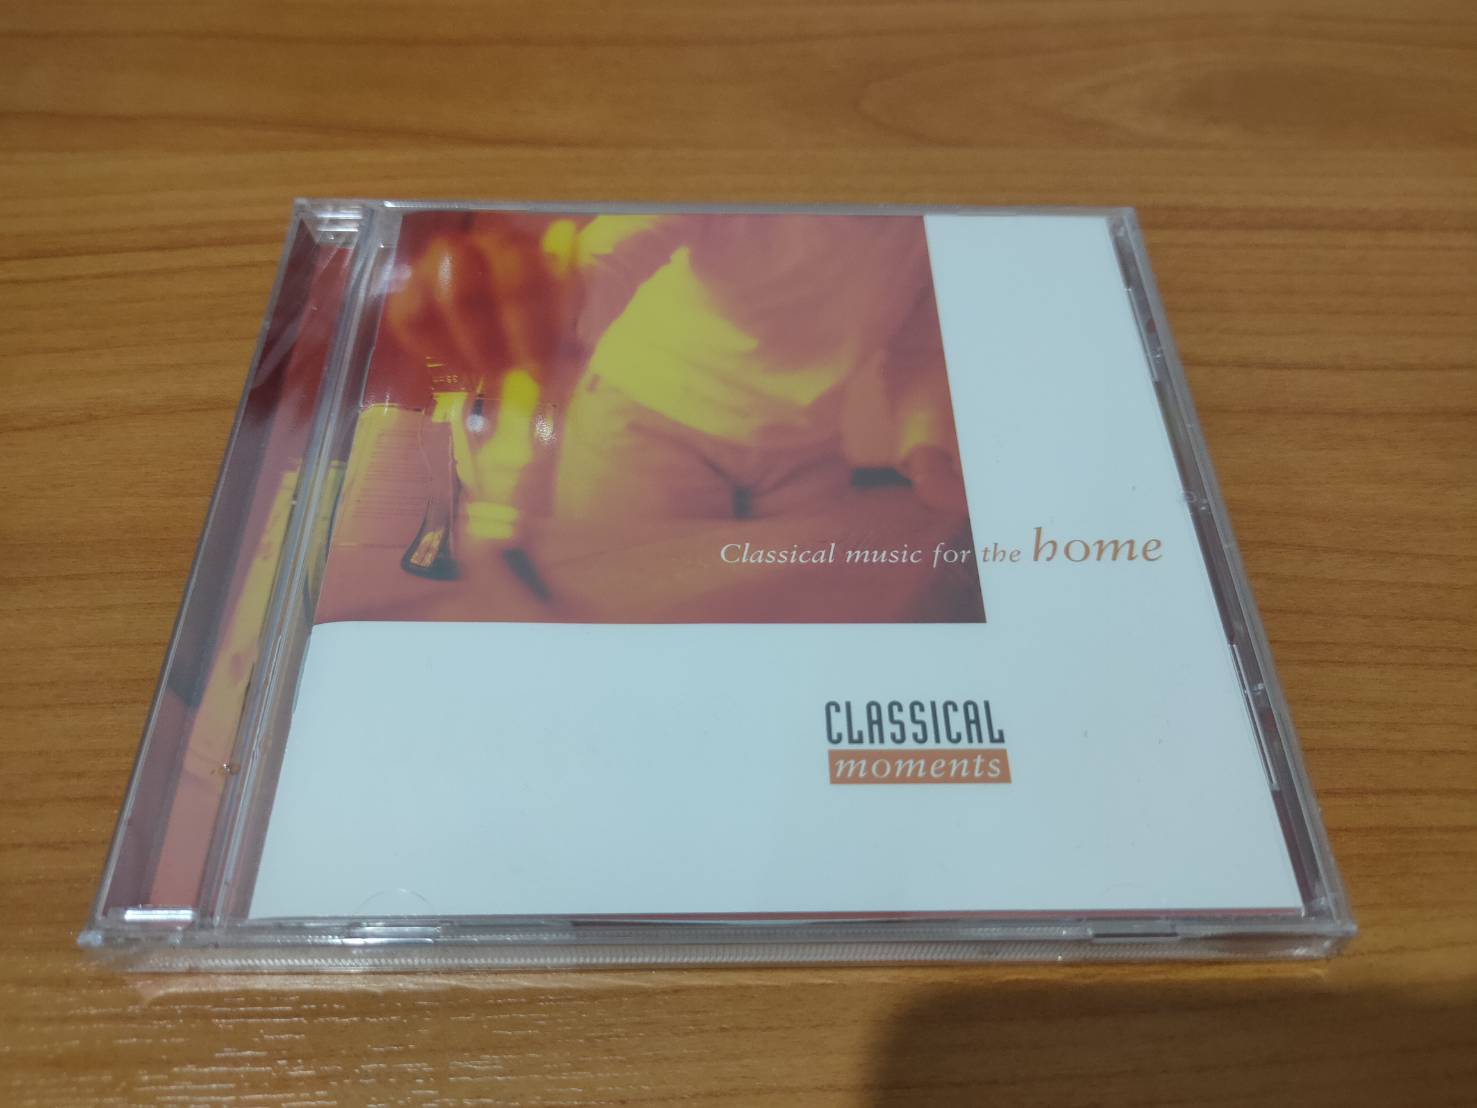 CD.MUSIC ซีดีเพลง เพลงสากล  Classical Music For The Home (***โปรดดูภาพสินค้าอย่างละเอียดก่อนทำการสั่งซื้อ*** )